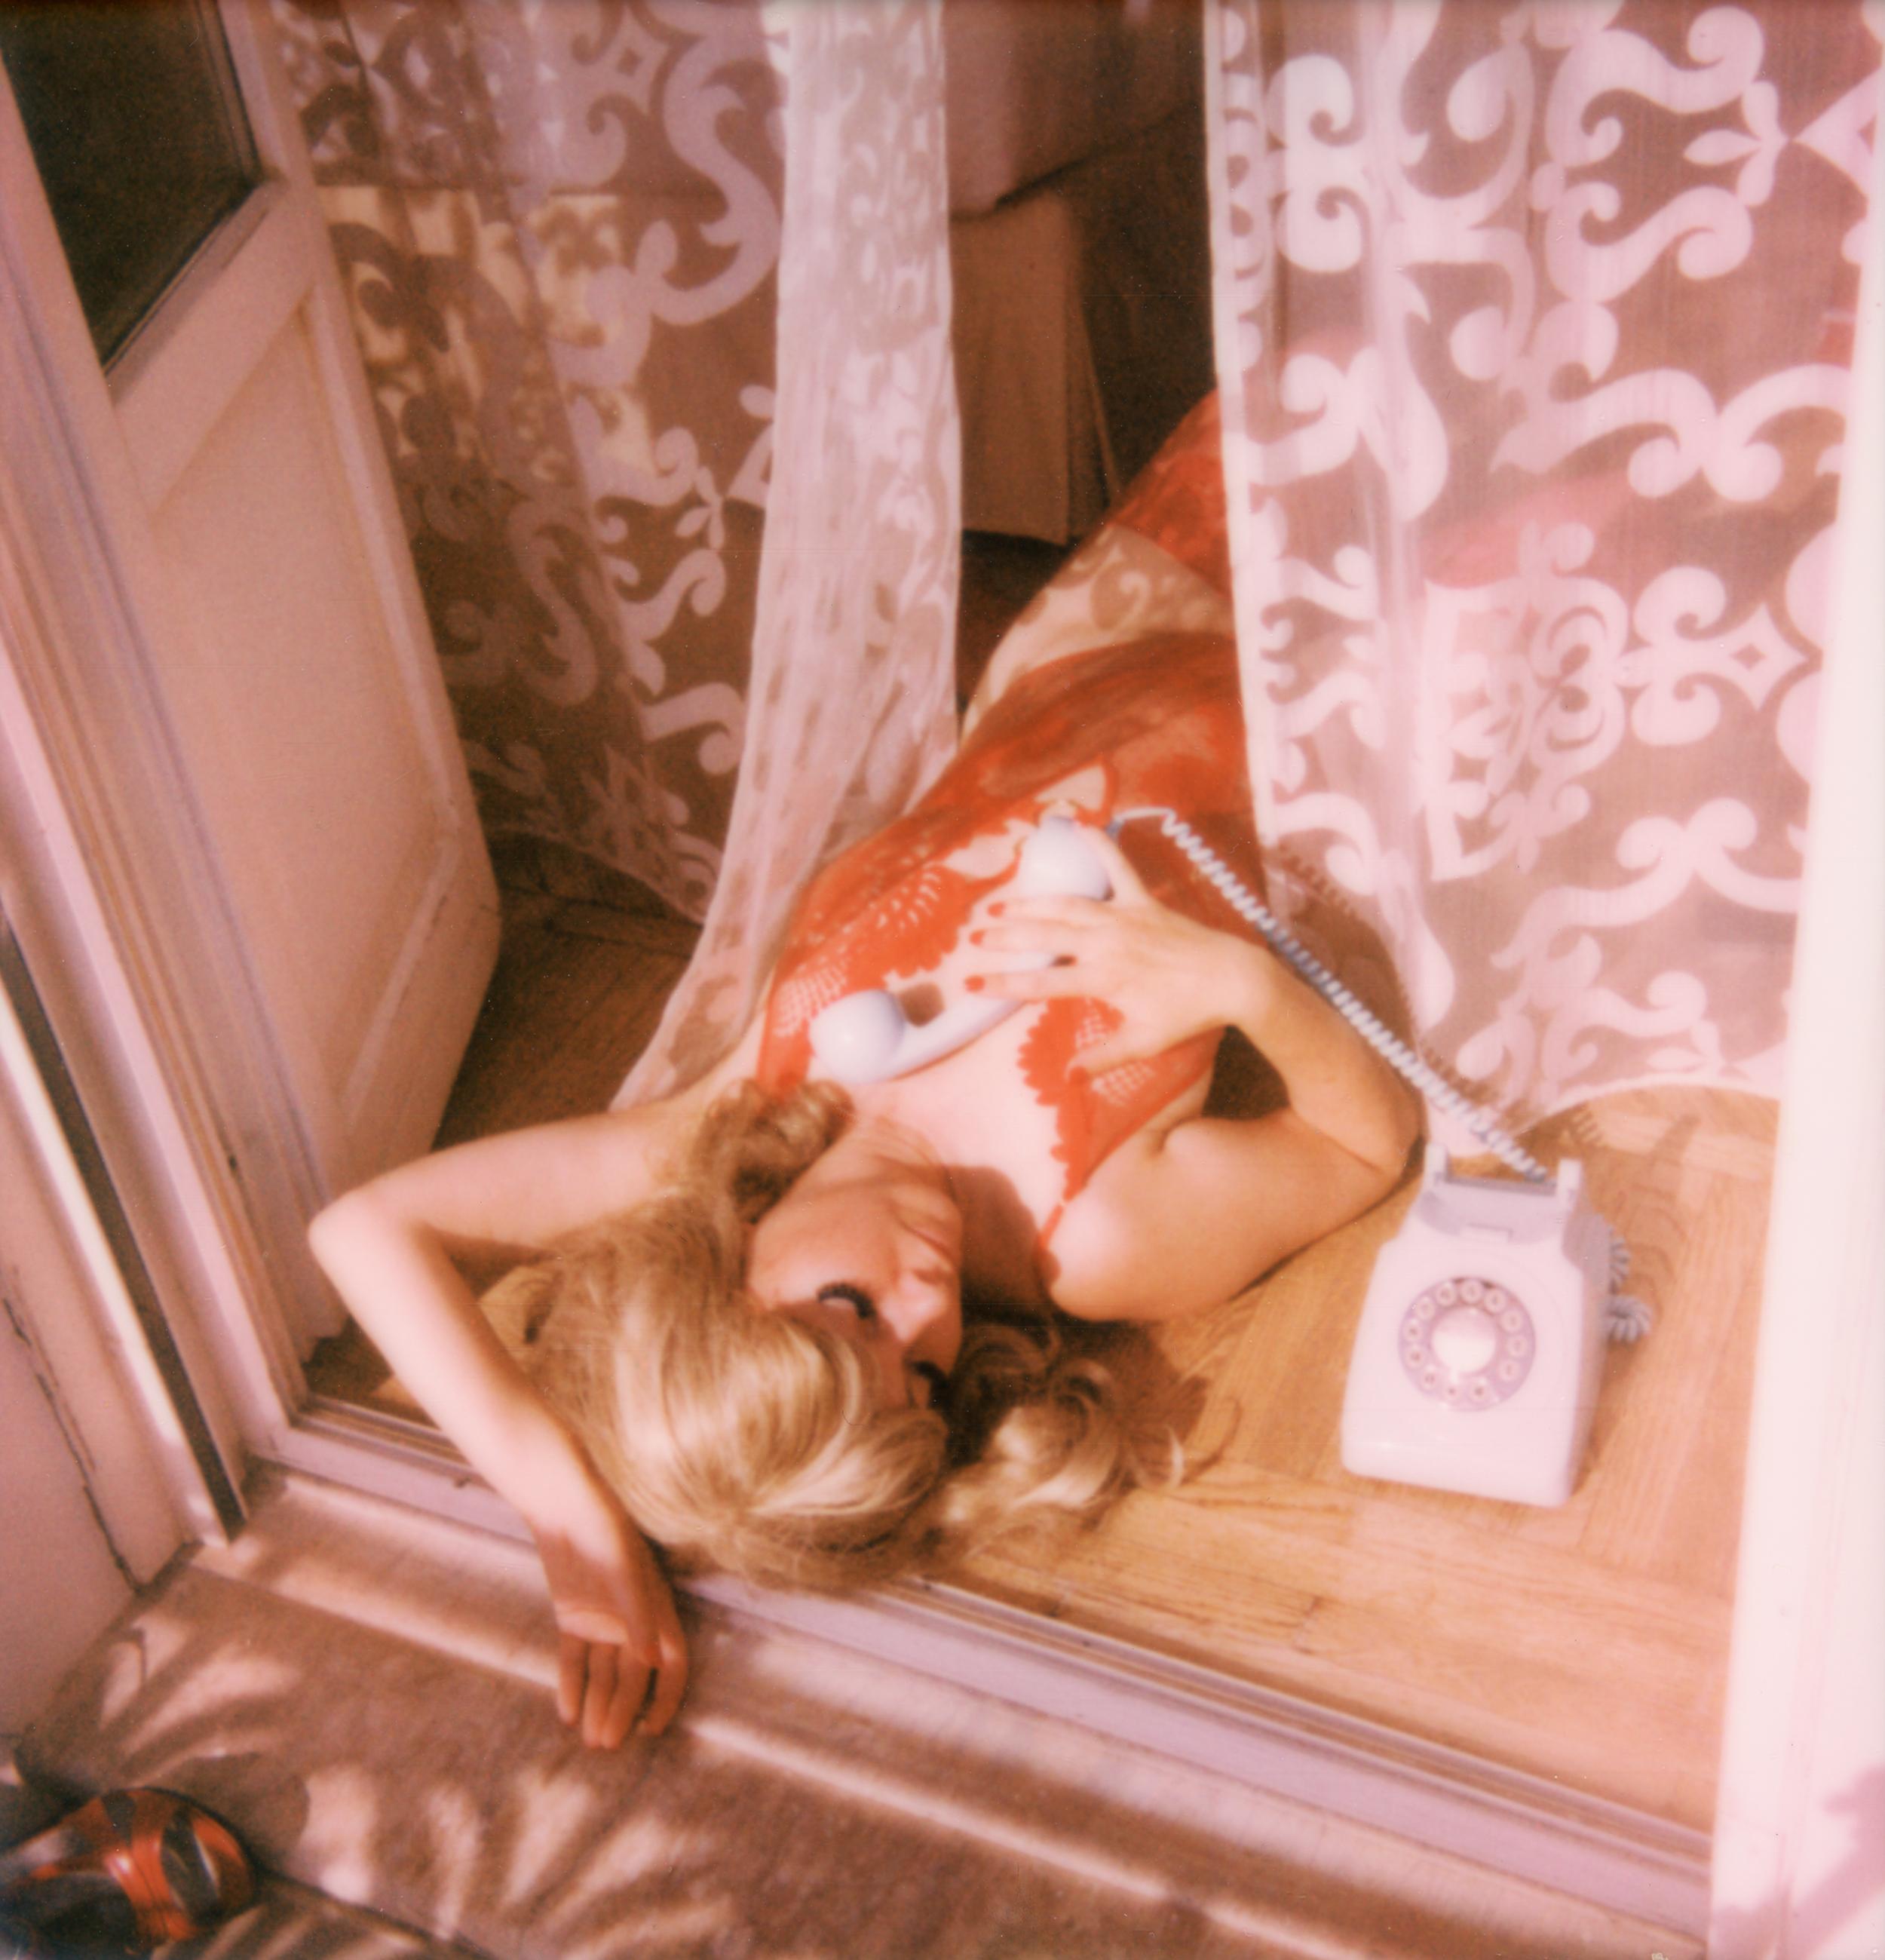 Morning Slumber - Zeitgenössisch, Polaroid, Frau, 21. Jahrhundert, Nackt, Psychiatrie